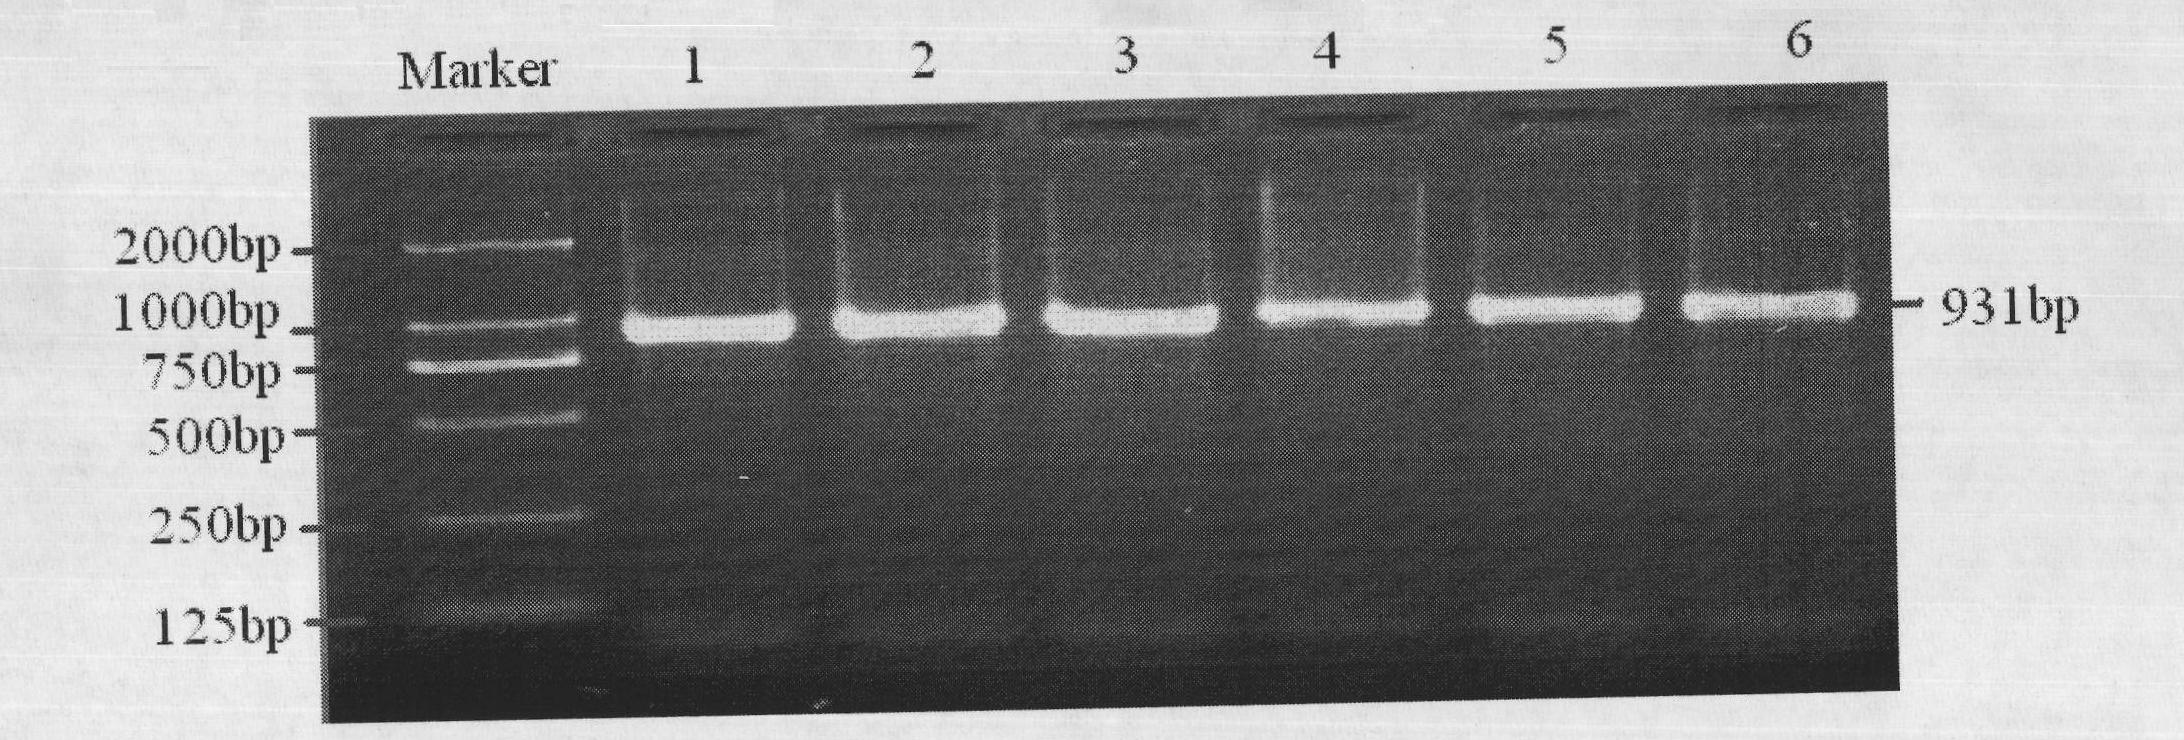 Method for detecting single nucleotide polymorphism of cattle krupple-like factor (KLF) 7 gene